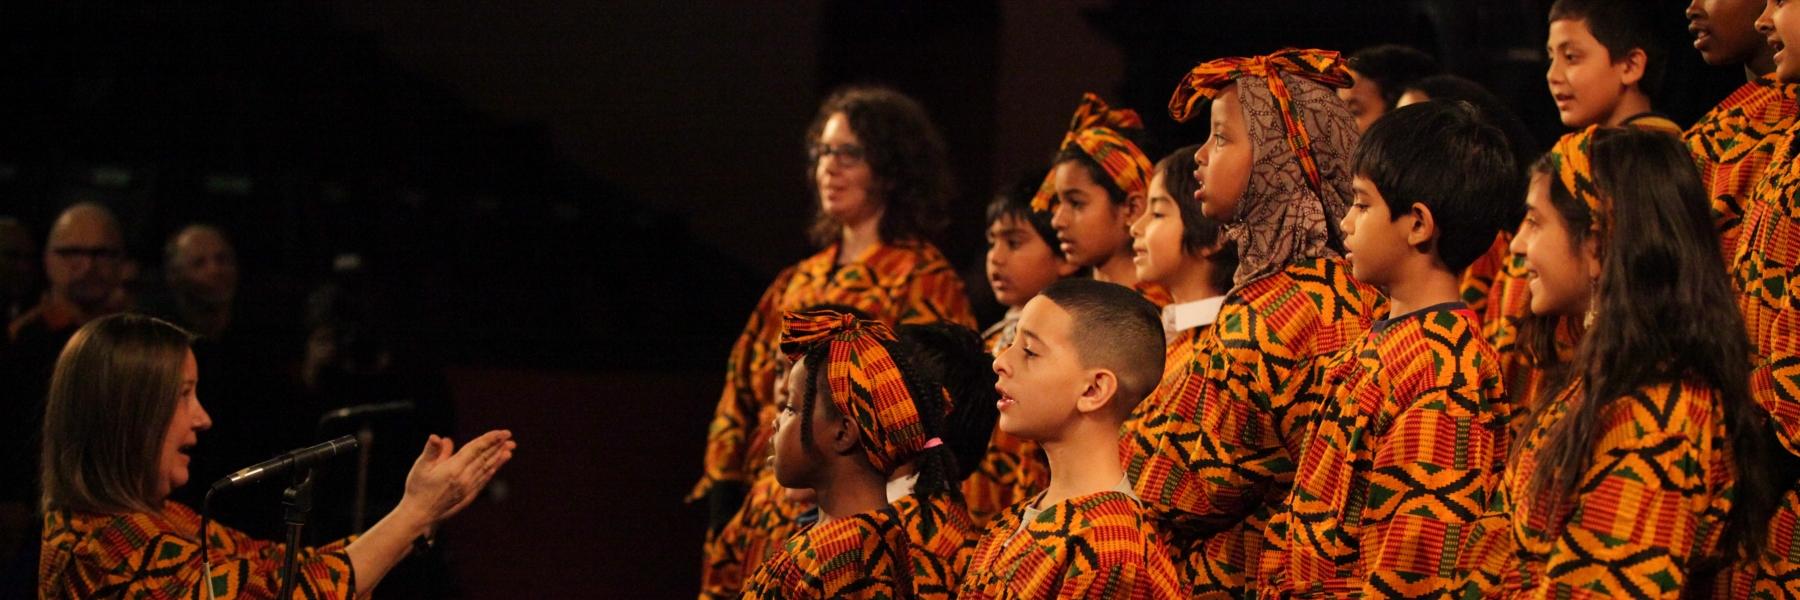 choir in african robes